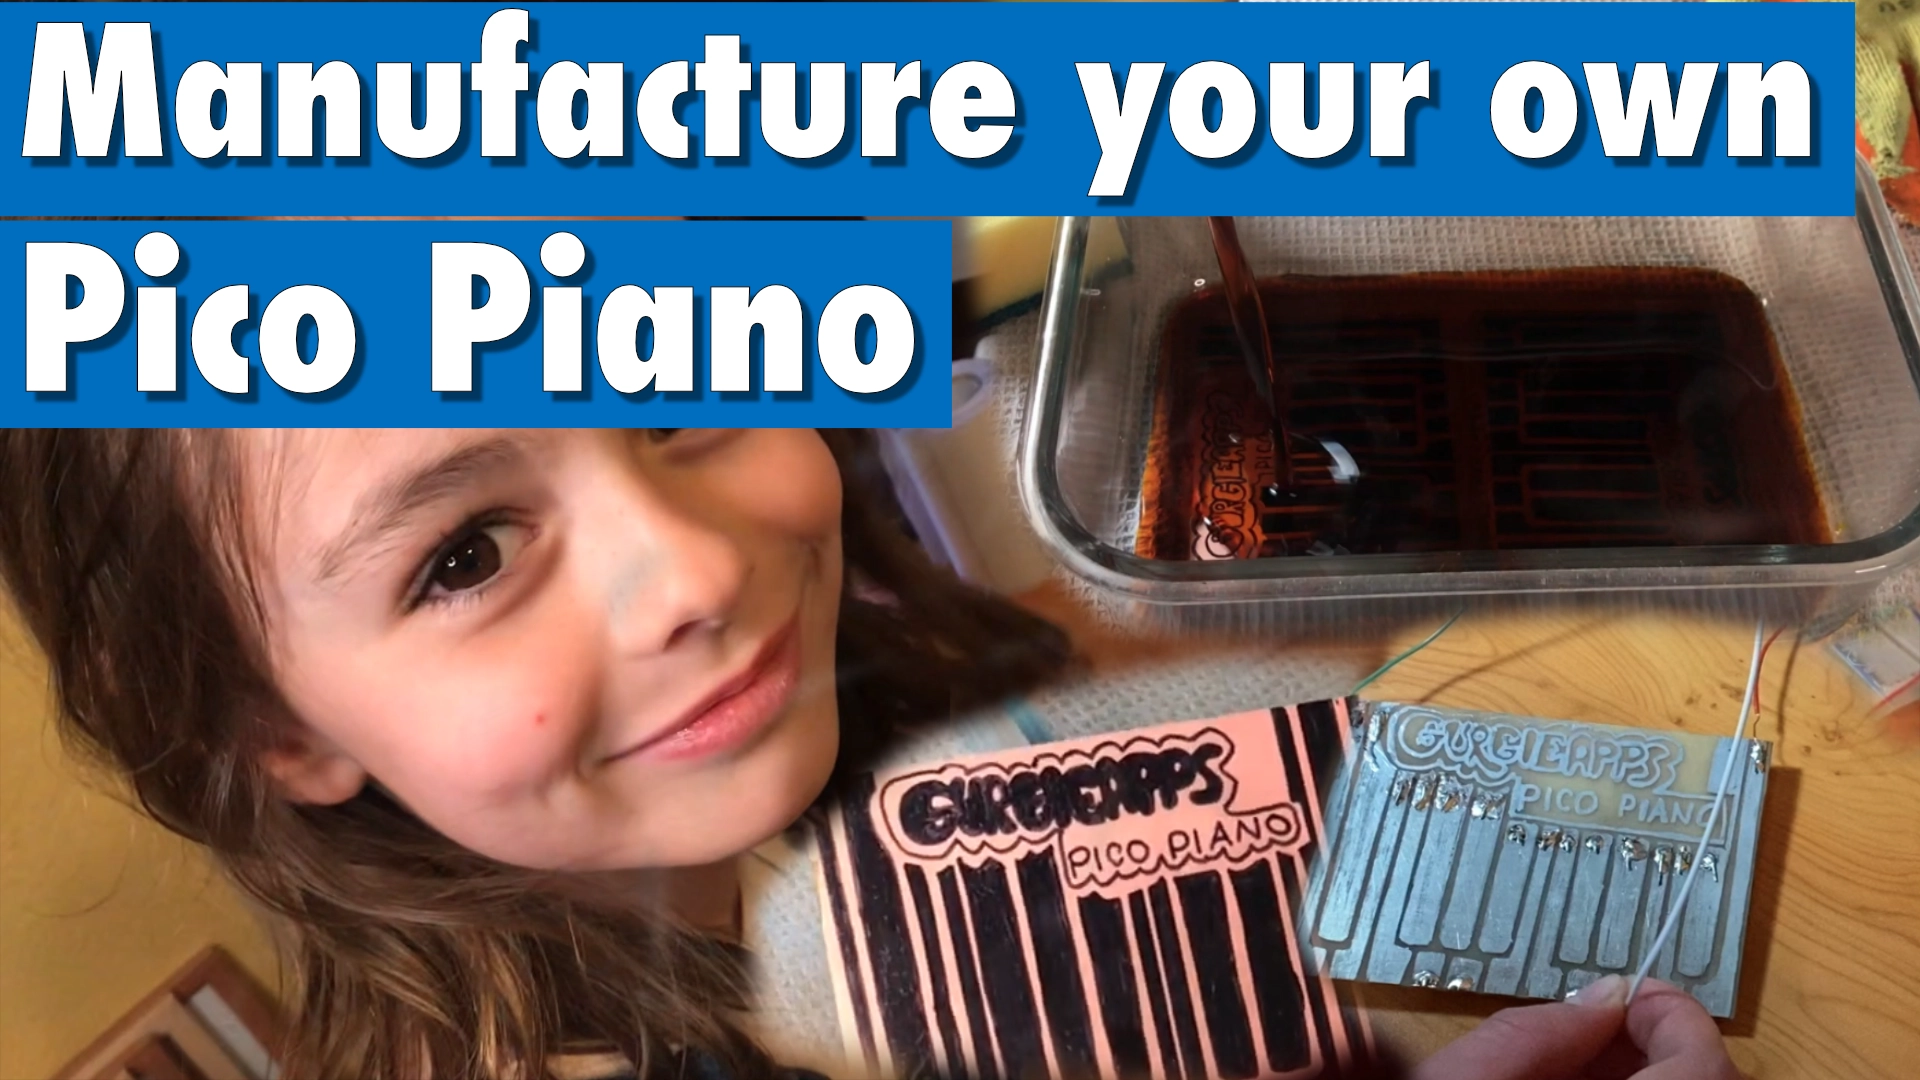 DIY circuit board piano article tumbnail